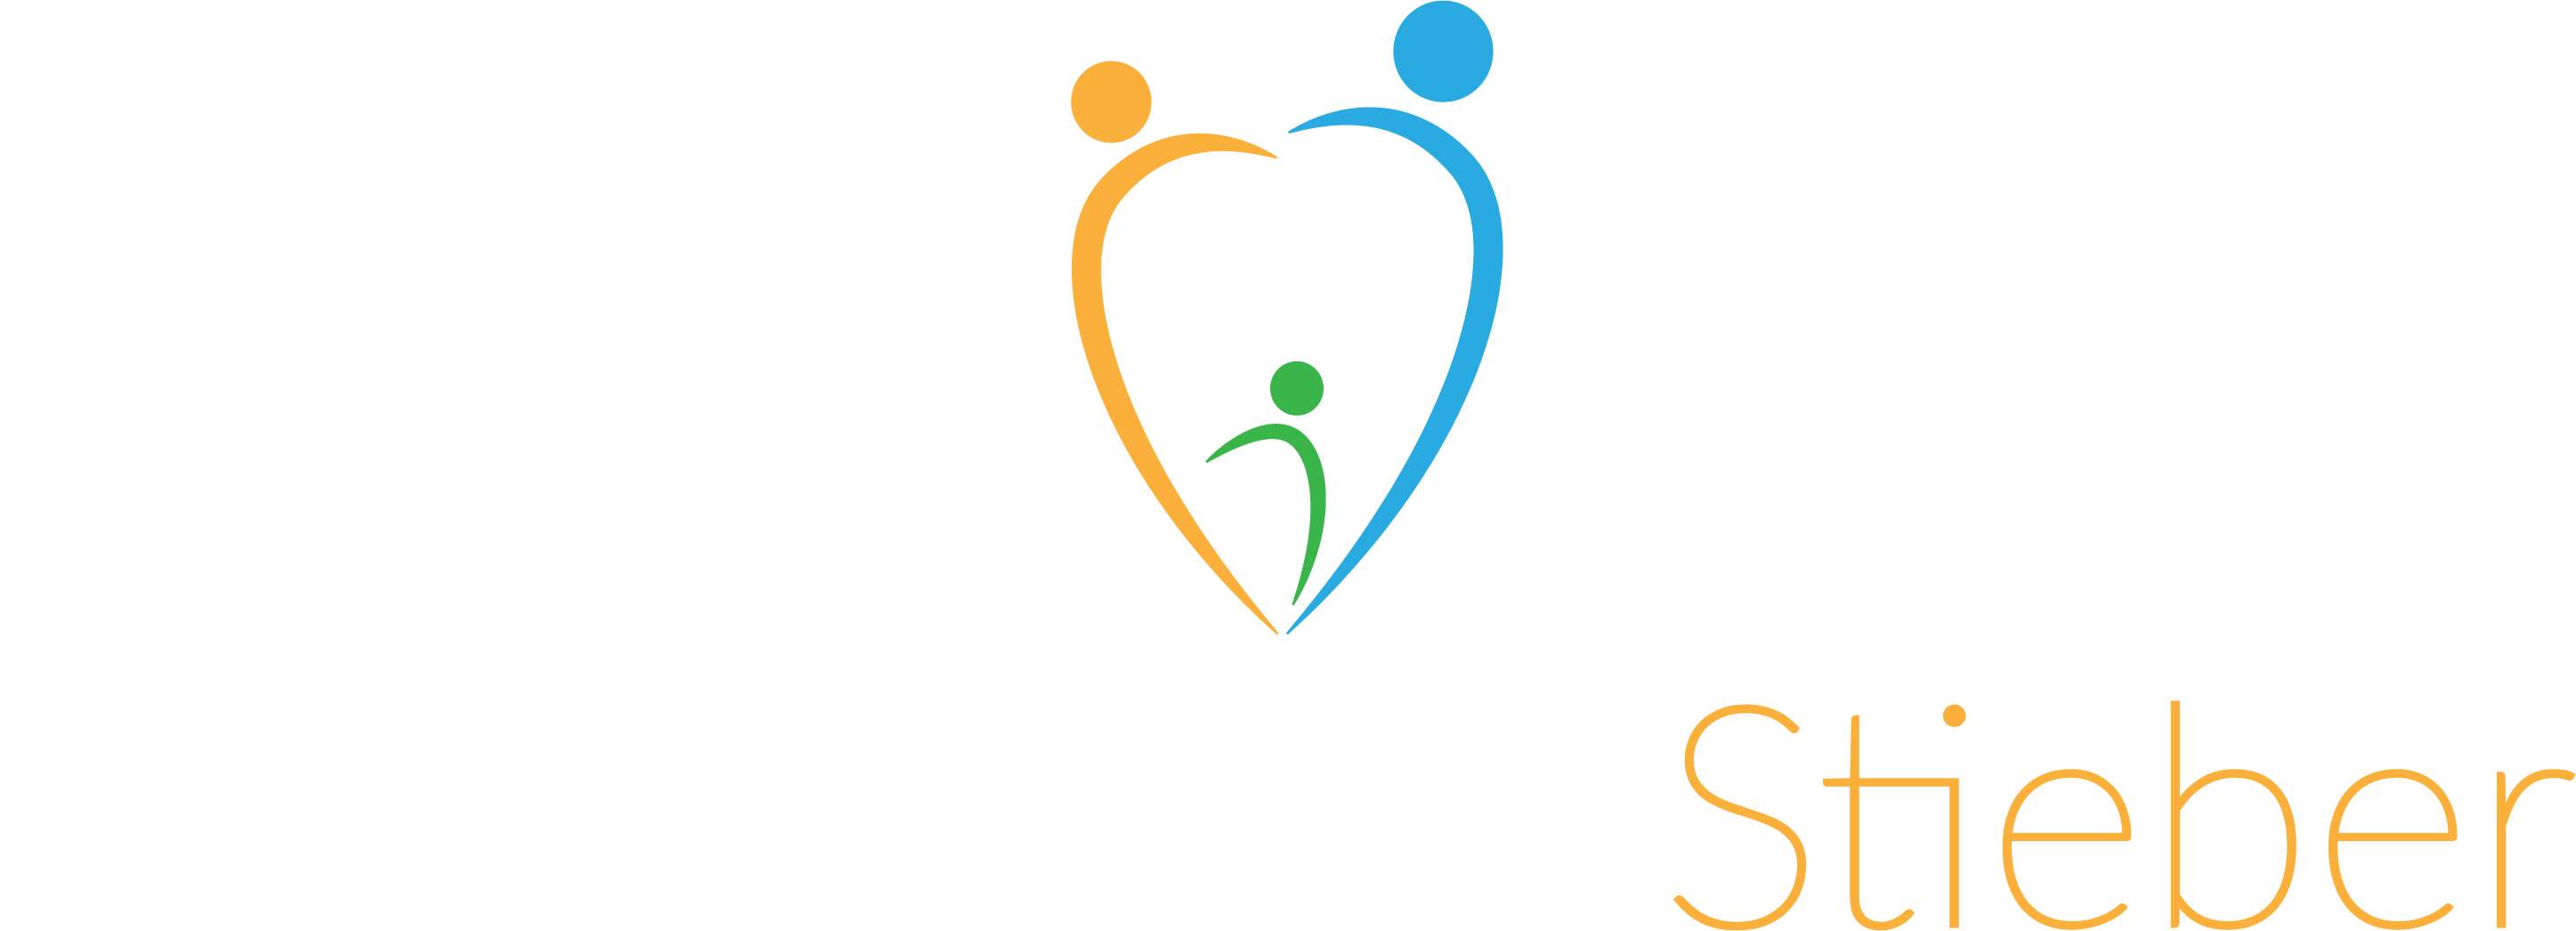 Familienhilfe Stieber Logo